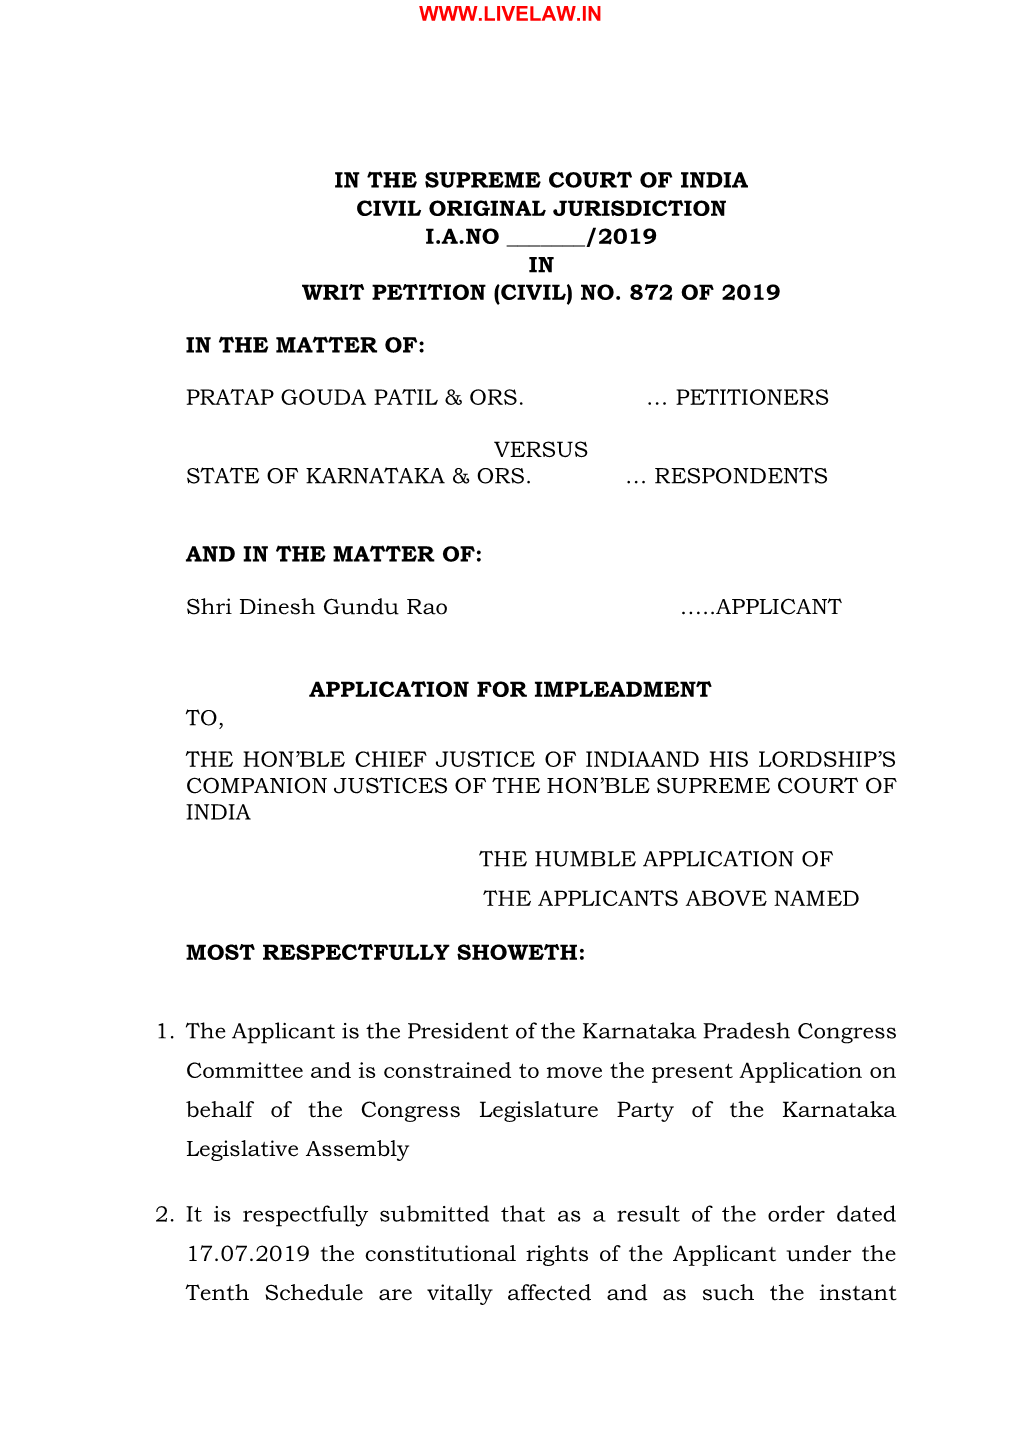 In the Supreme Court of India Civil Original Jurisdiction I.A.No ______/2019 in Writ Petition (Civil) No